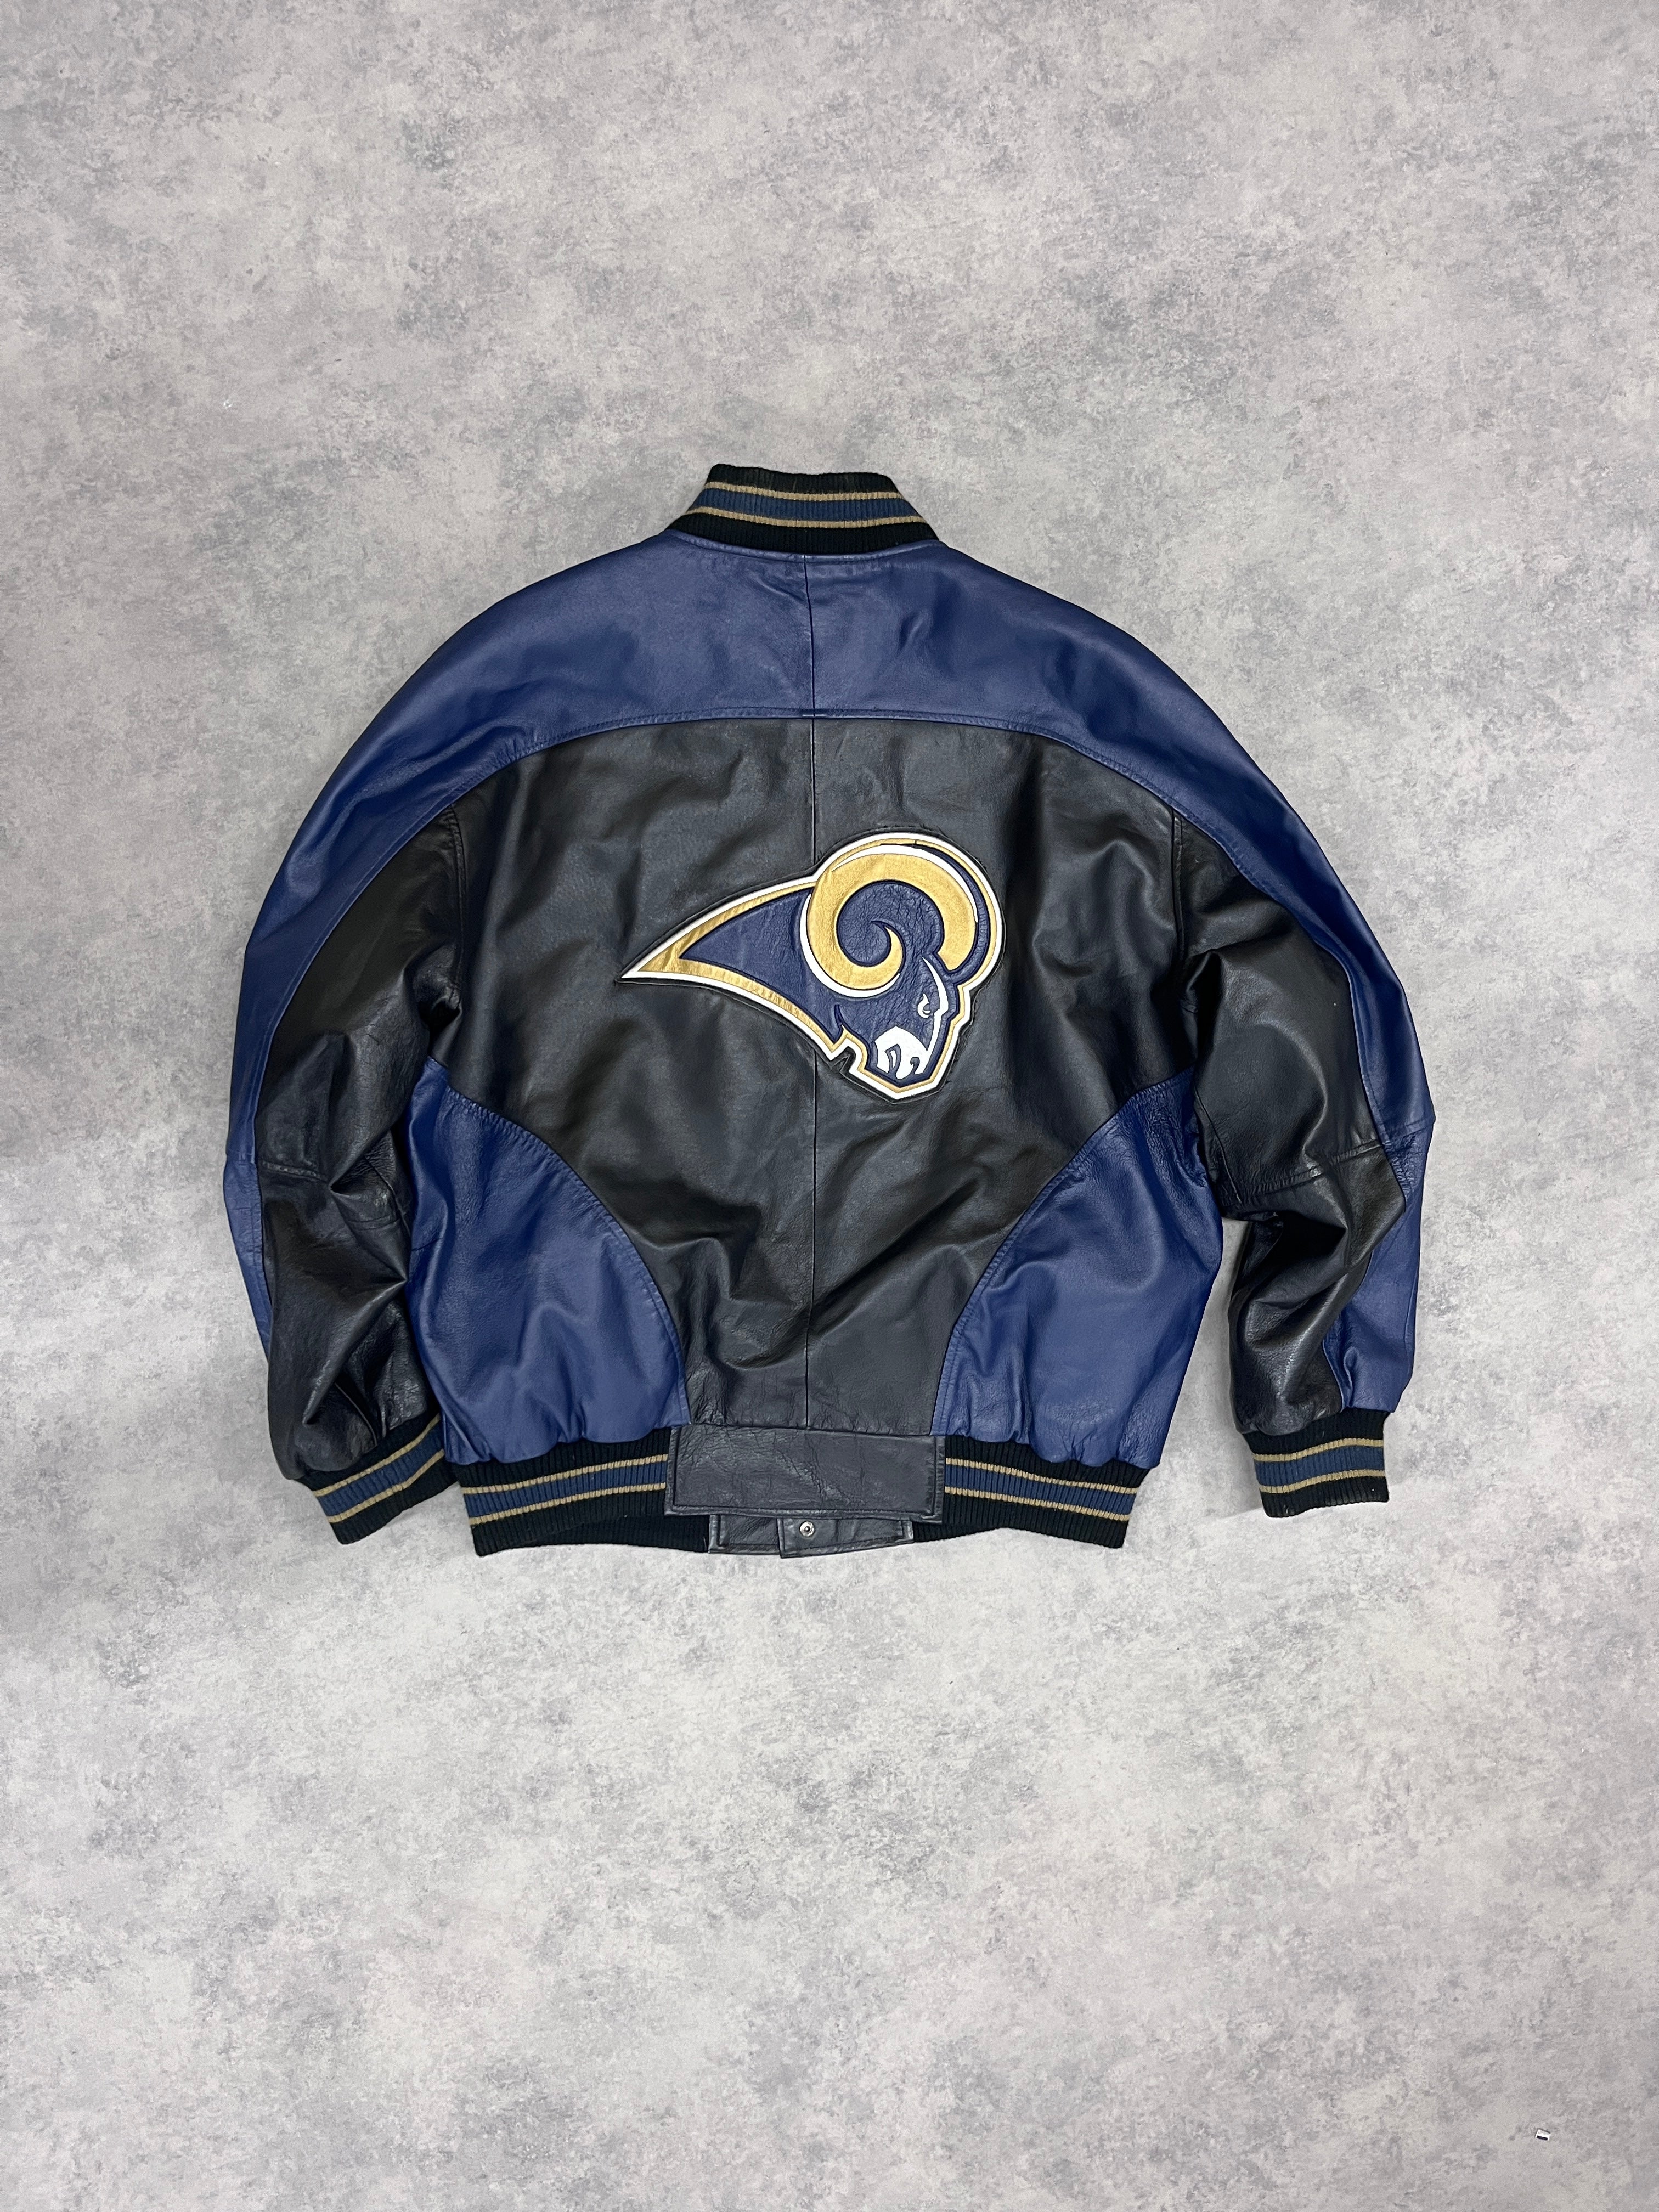 Vintage NFL St. Louis Rams Varsity Jacket Leather Black // Large - RHAGHOUSE VINTAGE